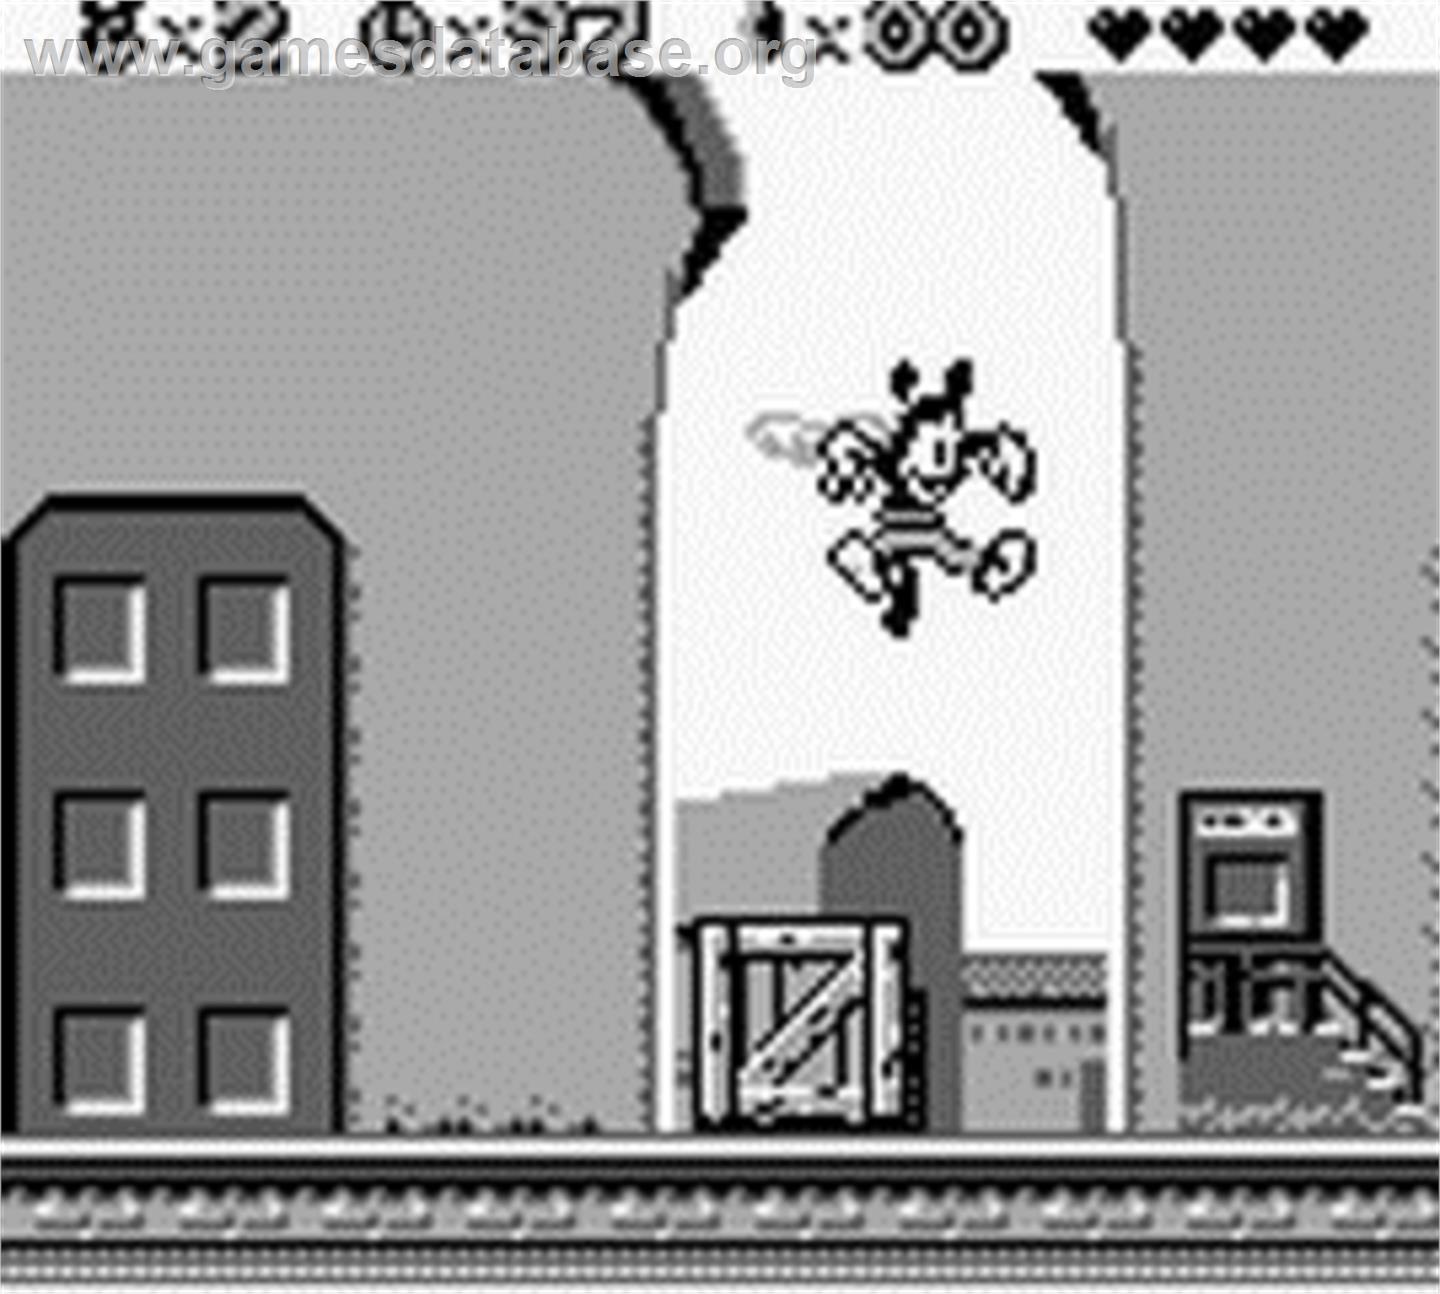 Animaniacs - Nintendo Game Boy - Artwork - In Game